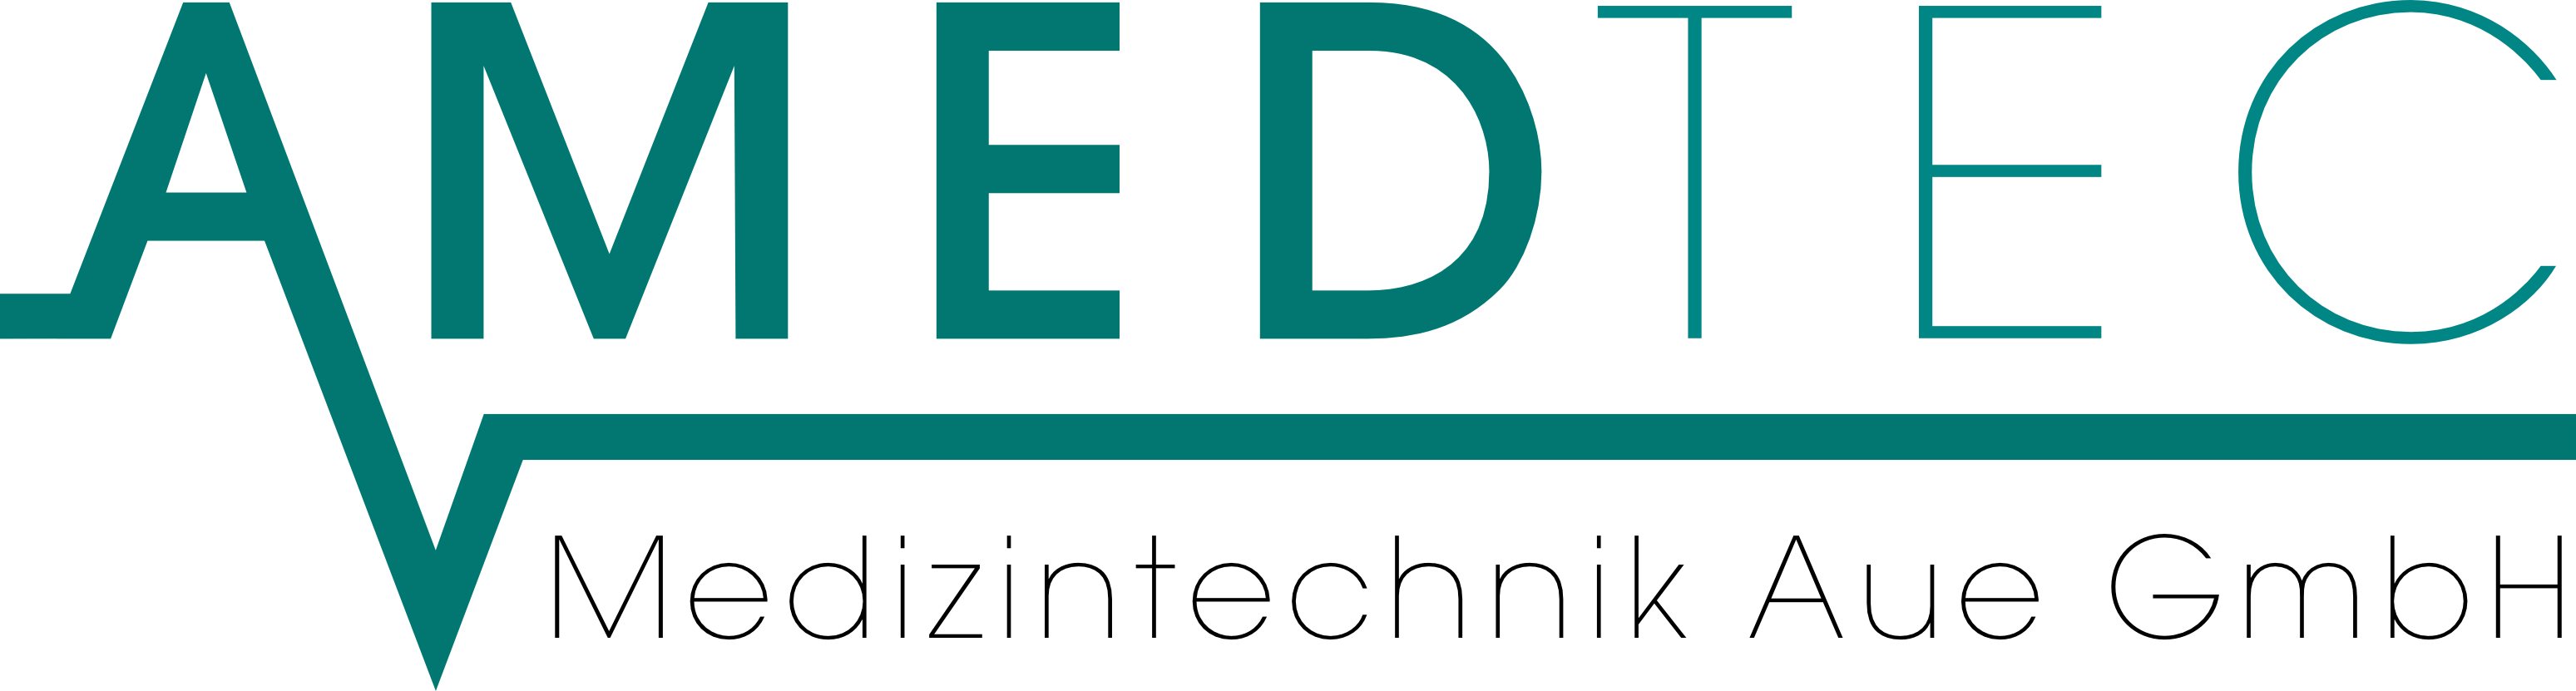 AMEDTEC Medizintechnik Aue GmbH logo